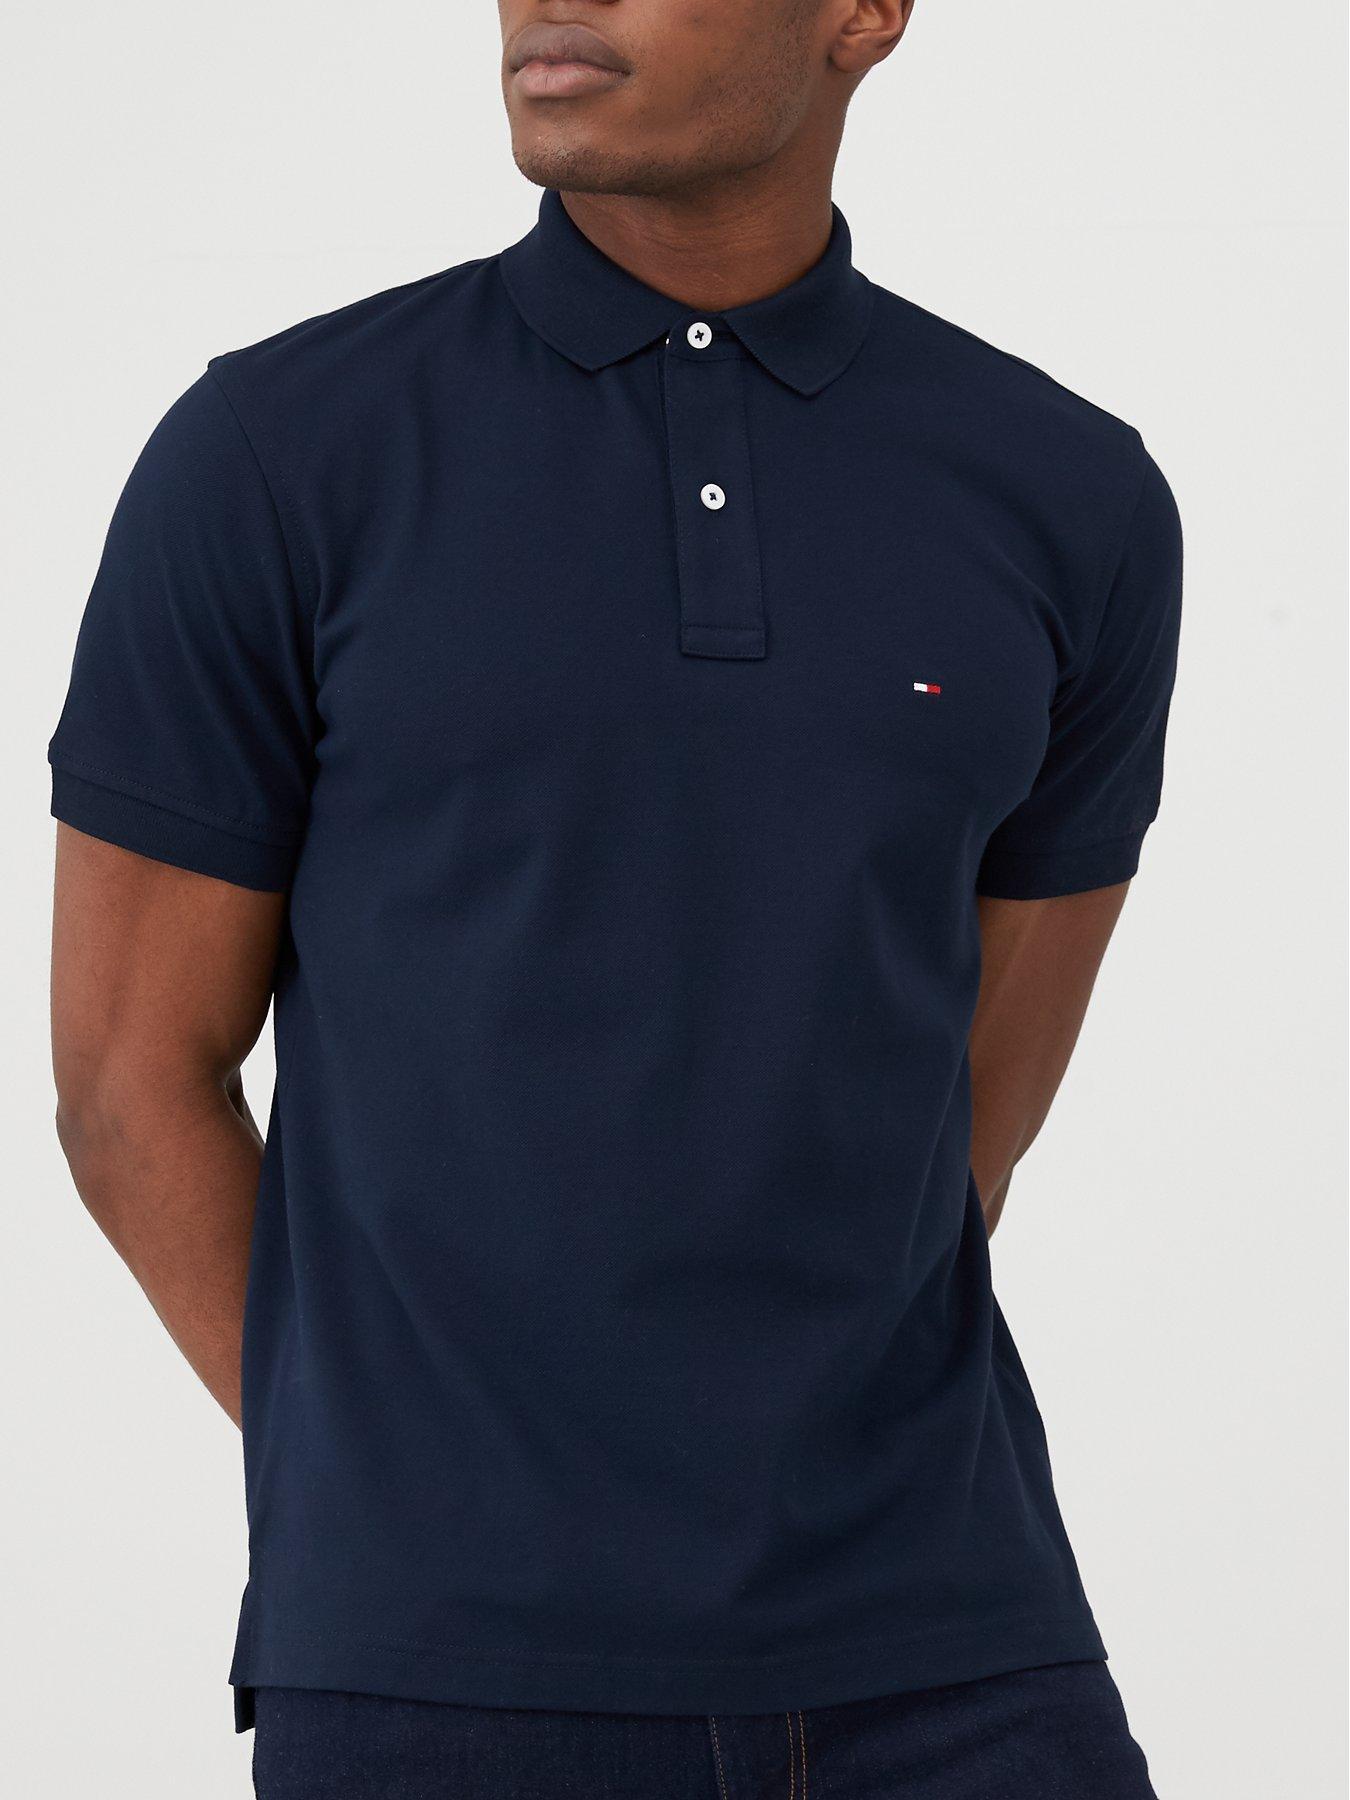 tommy hilfiger navy blue polo shirt